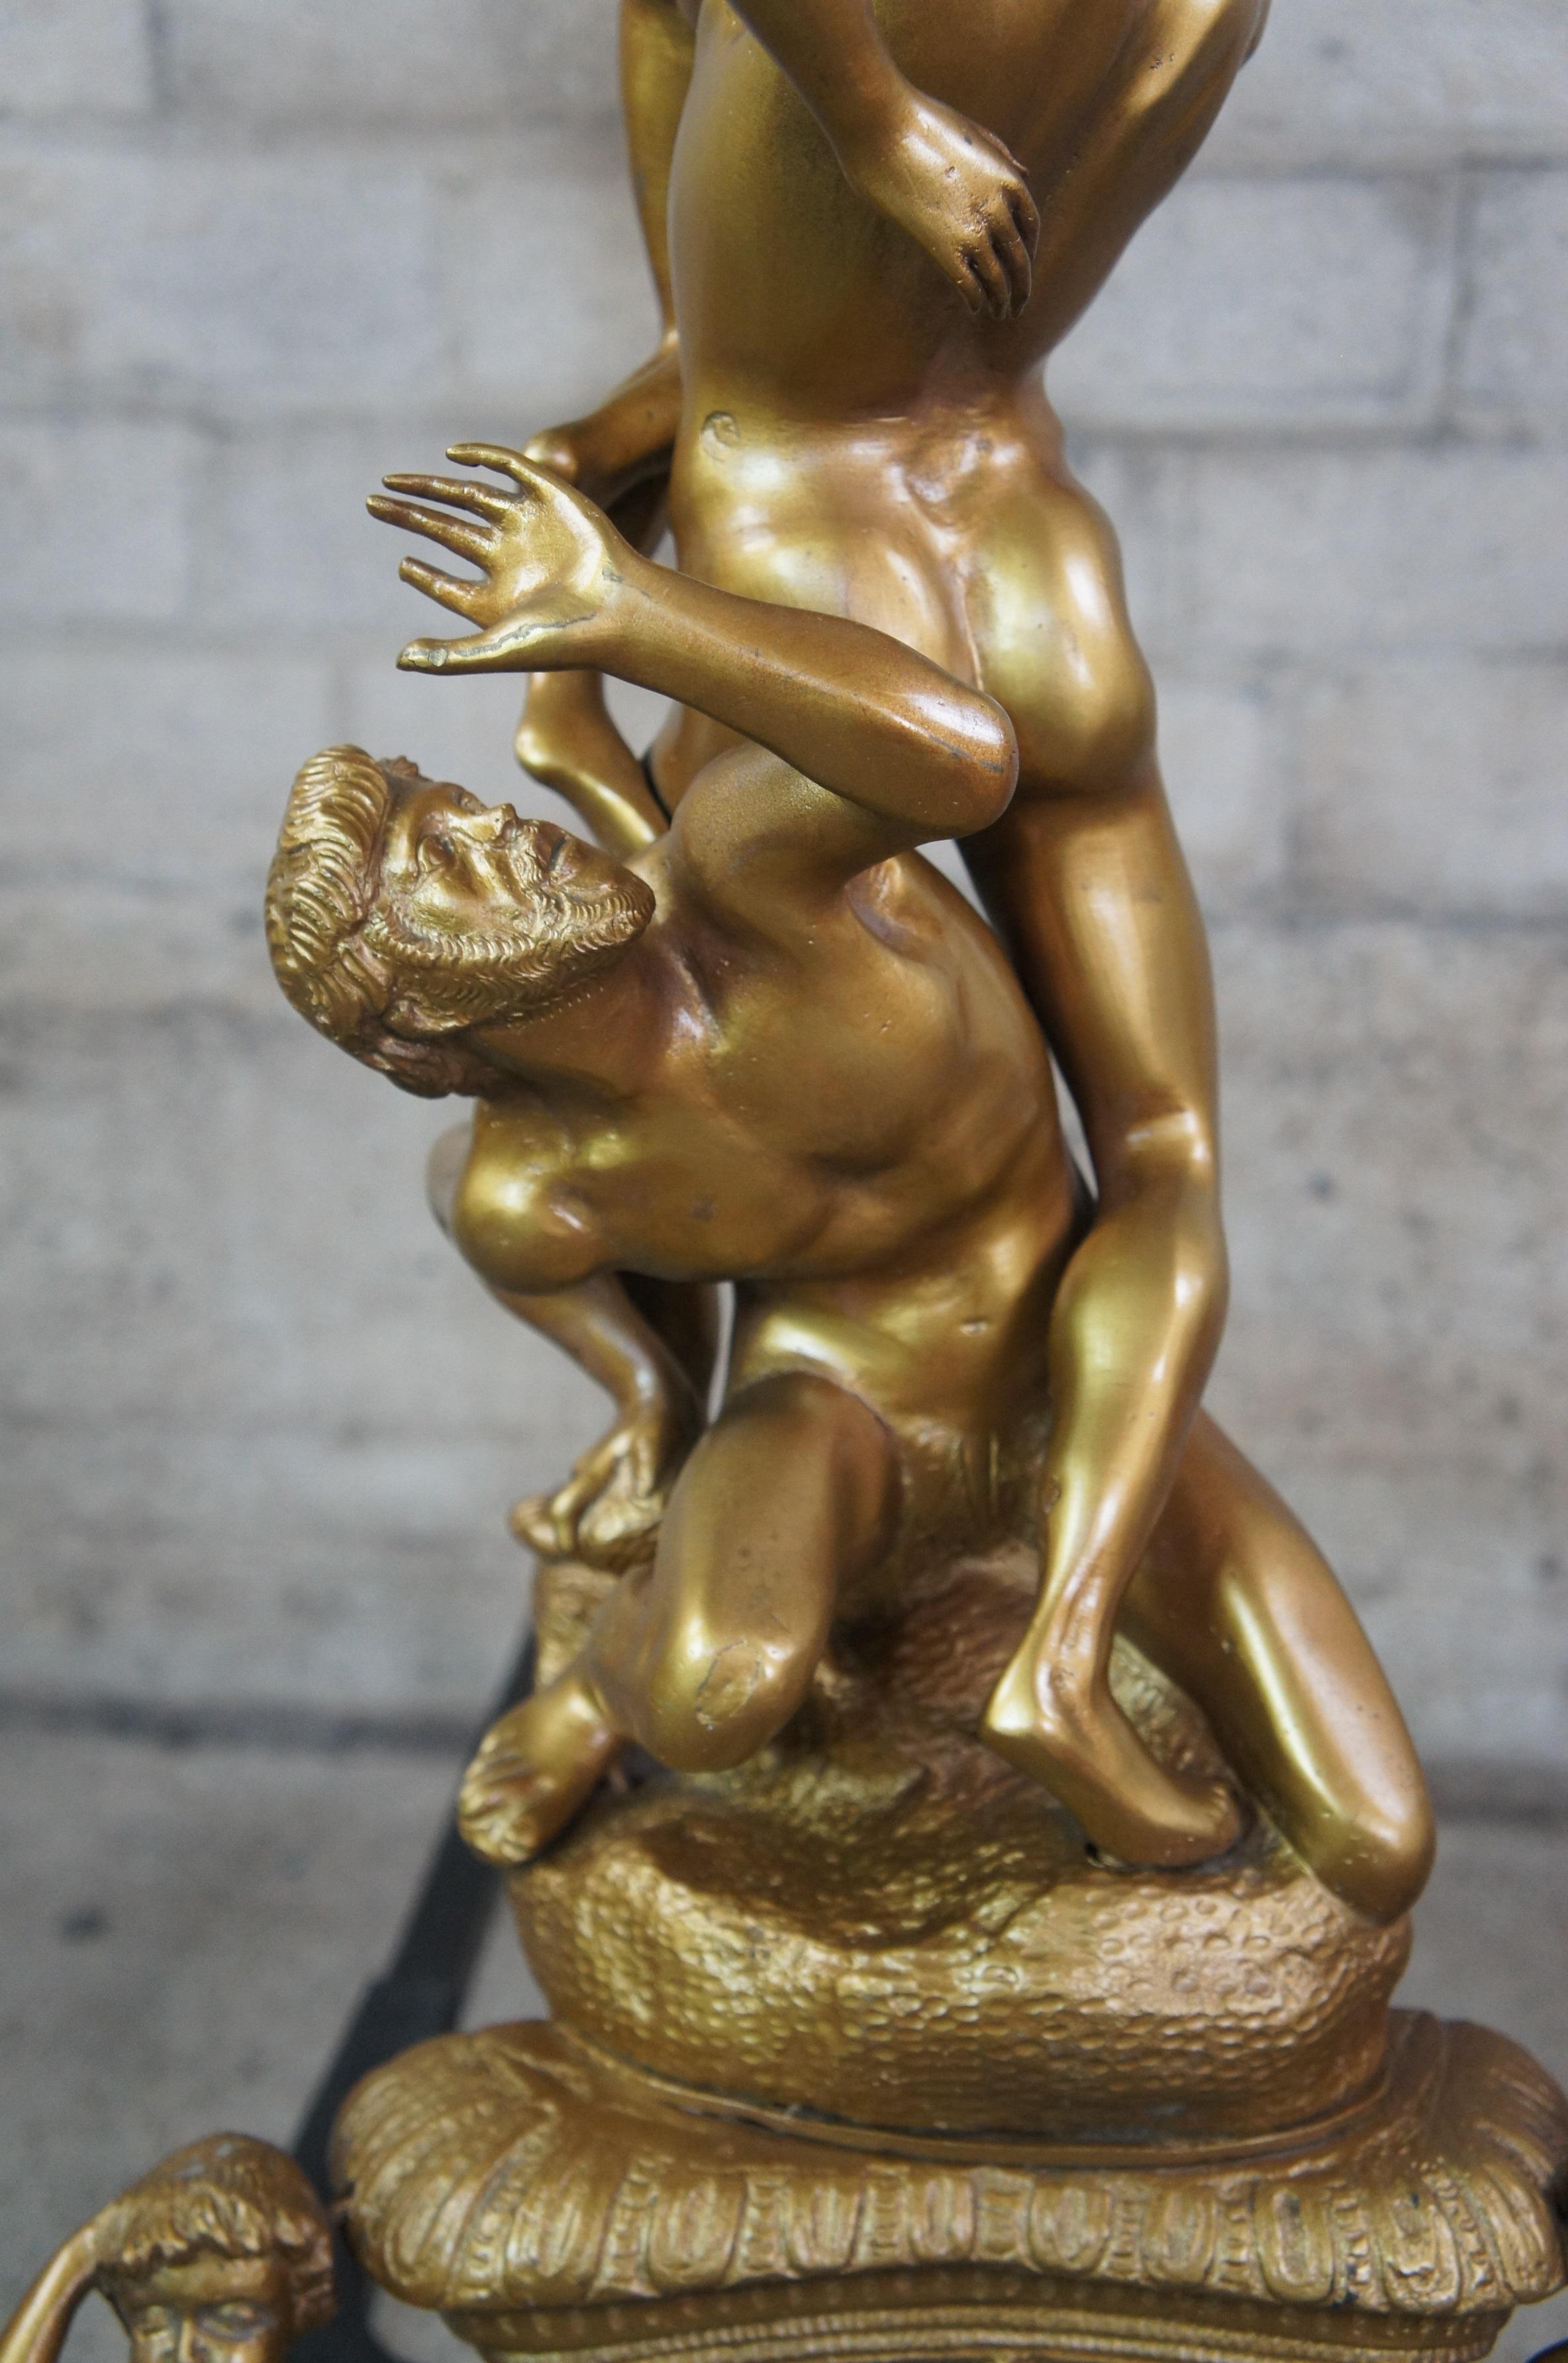 2 Monumental Renaissance Revival Sculptural Bronze Andirons After Giambologna For Sale 1